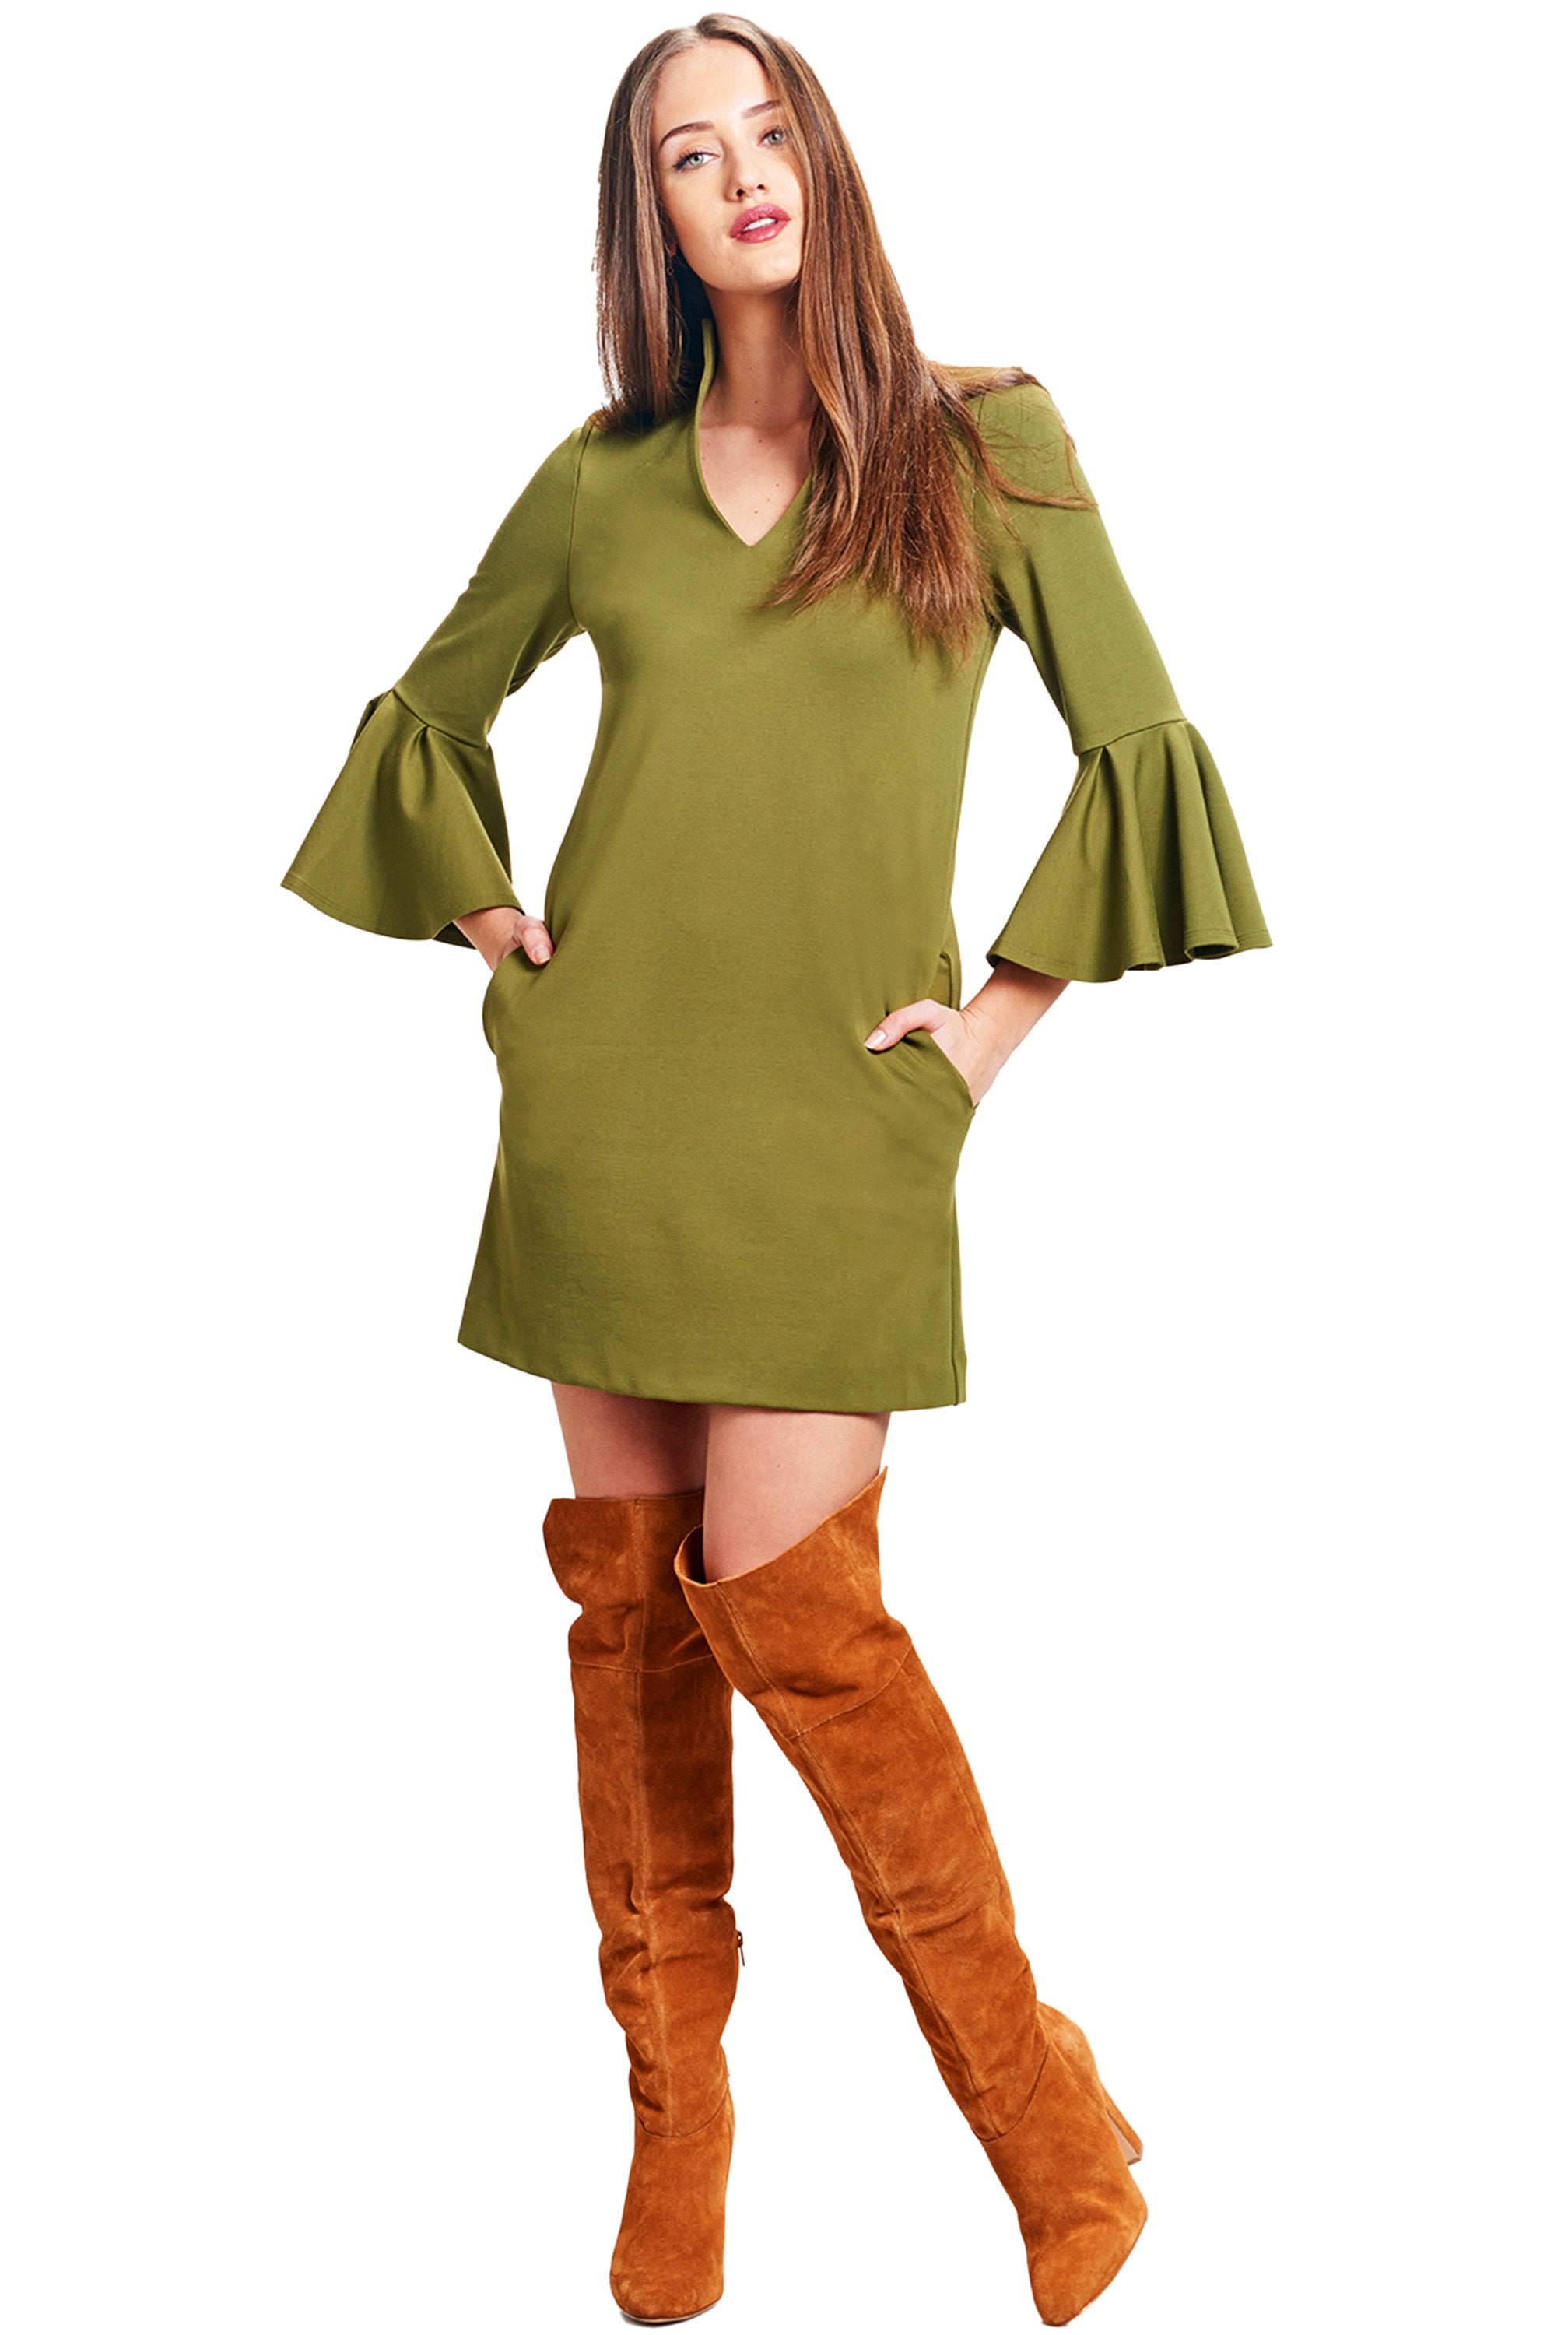 Gina Dress - Bell sleeve shift dress with side slit pockets (olive)